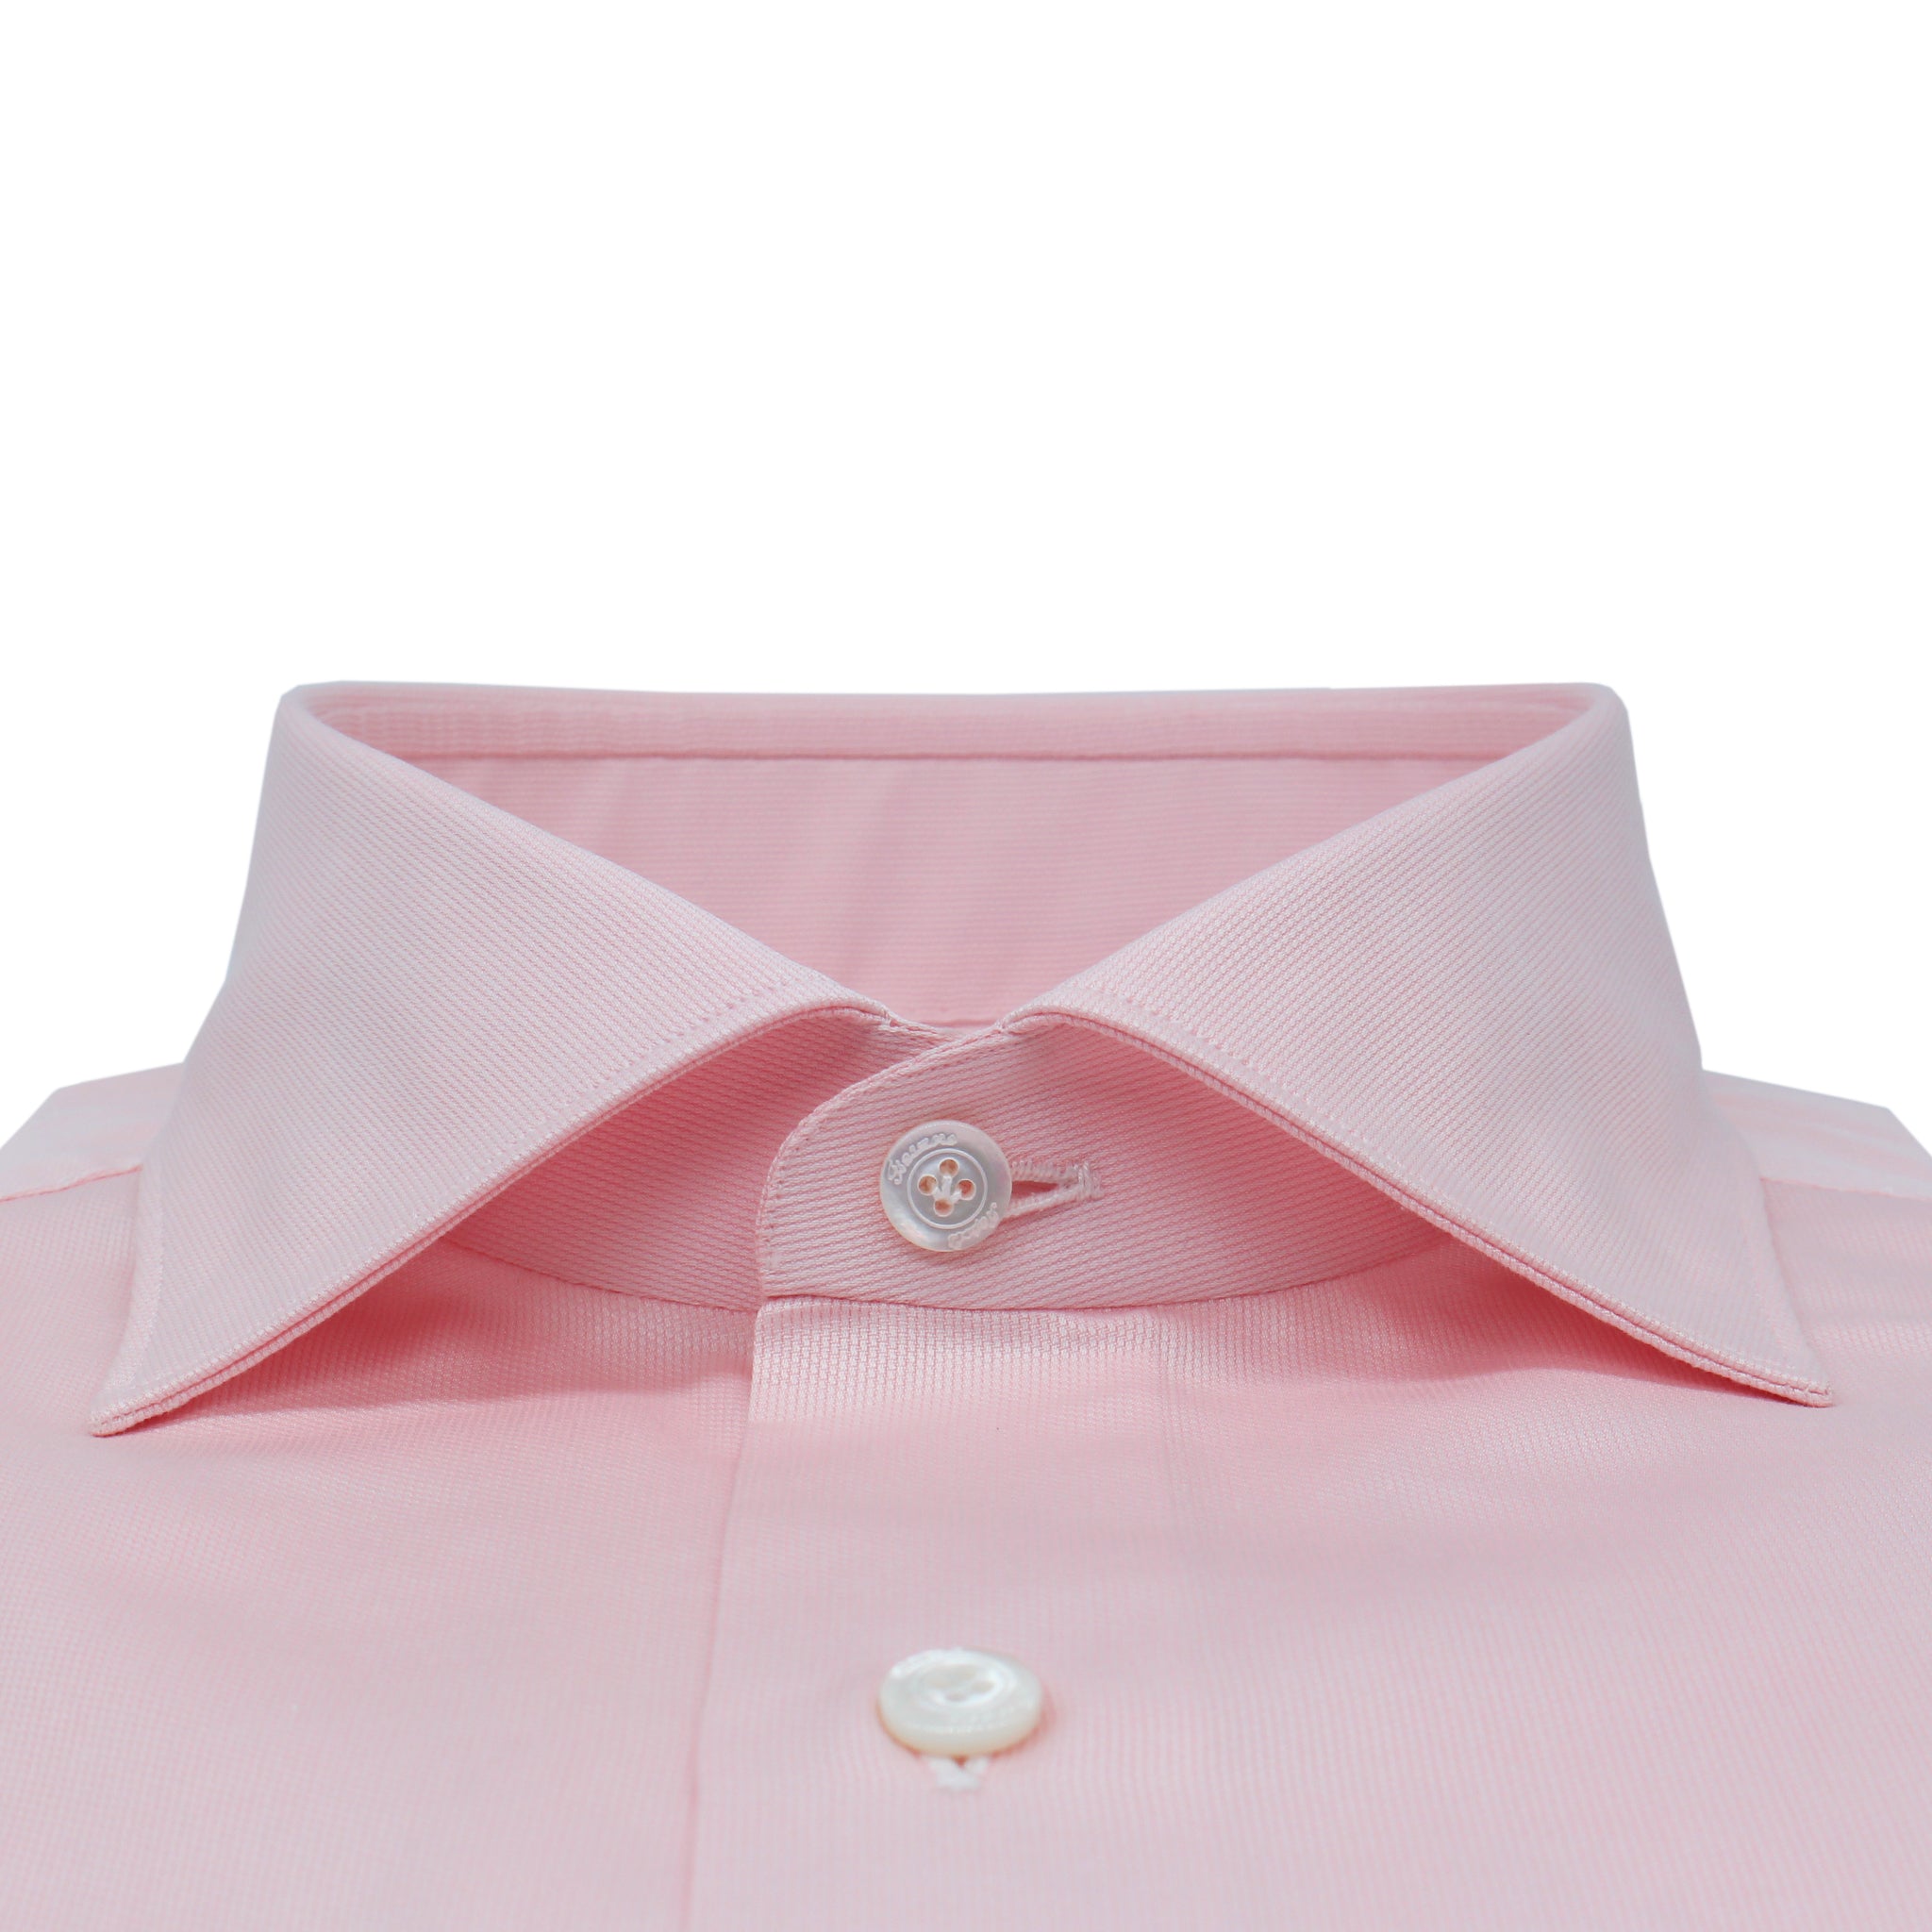 Milano slim fit shirt in light pink Piquet cotton